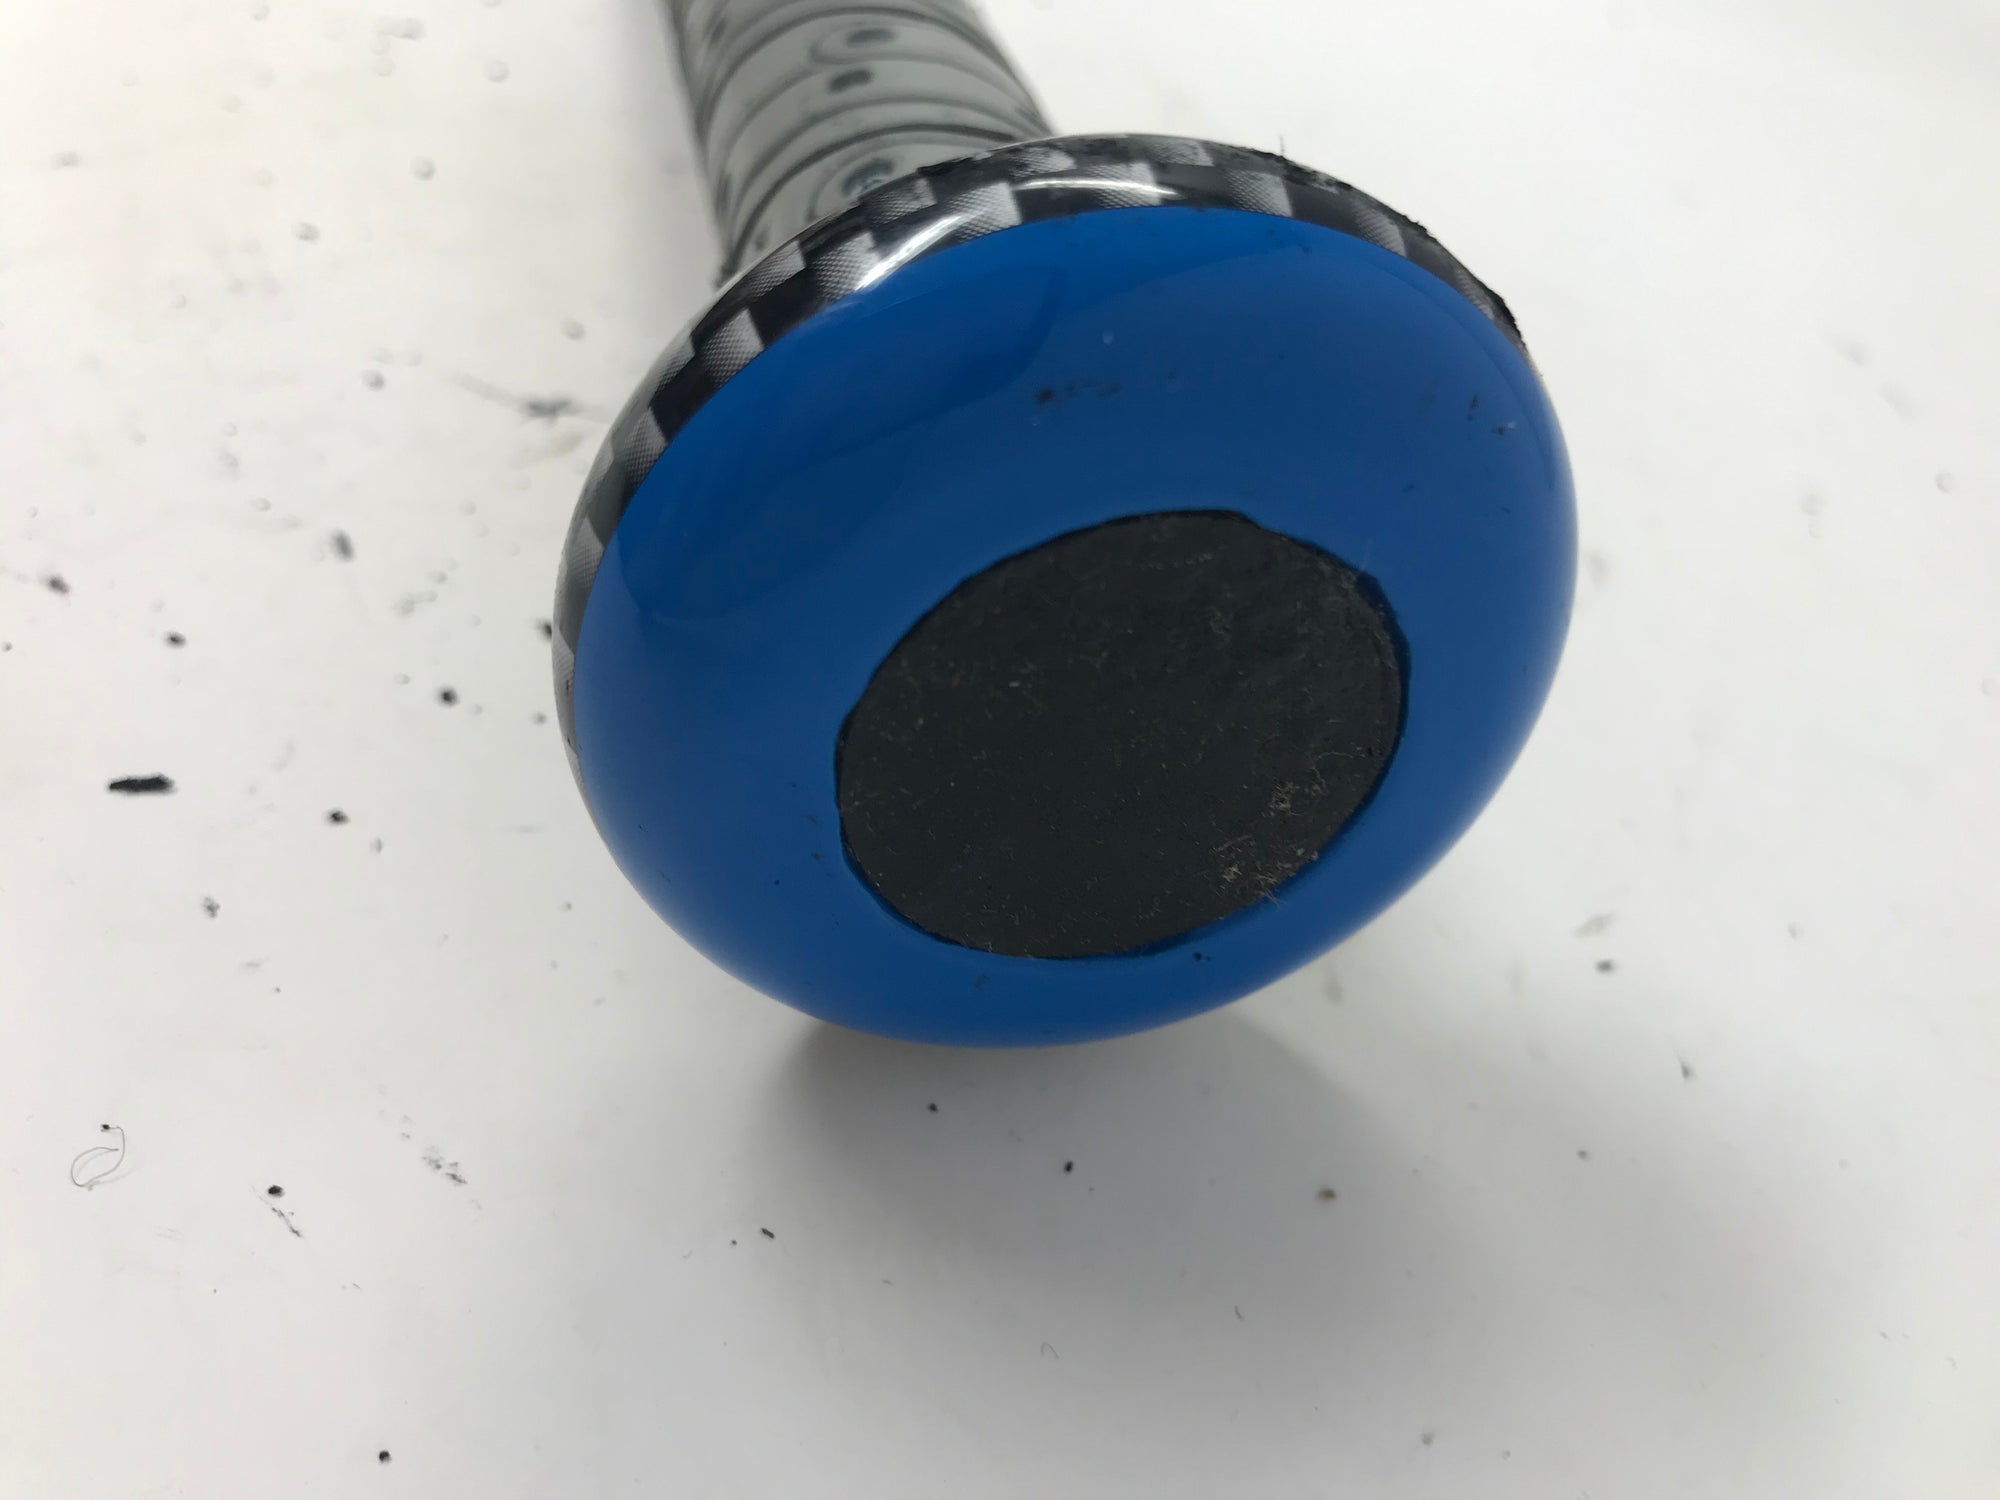 New Louisville Slugger LXT FPLX14 Fastpitch Softball Bat Blue/Black